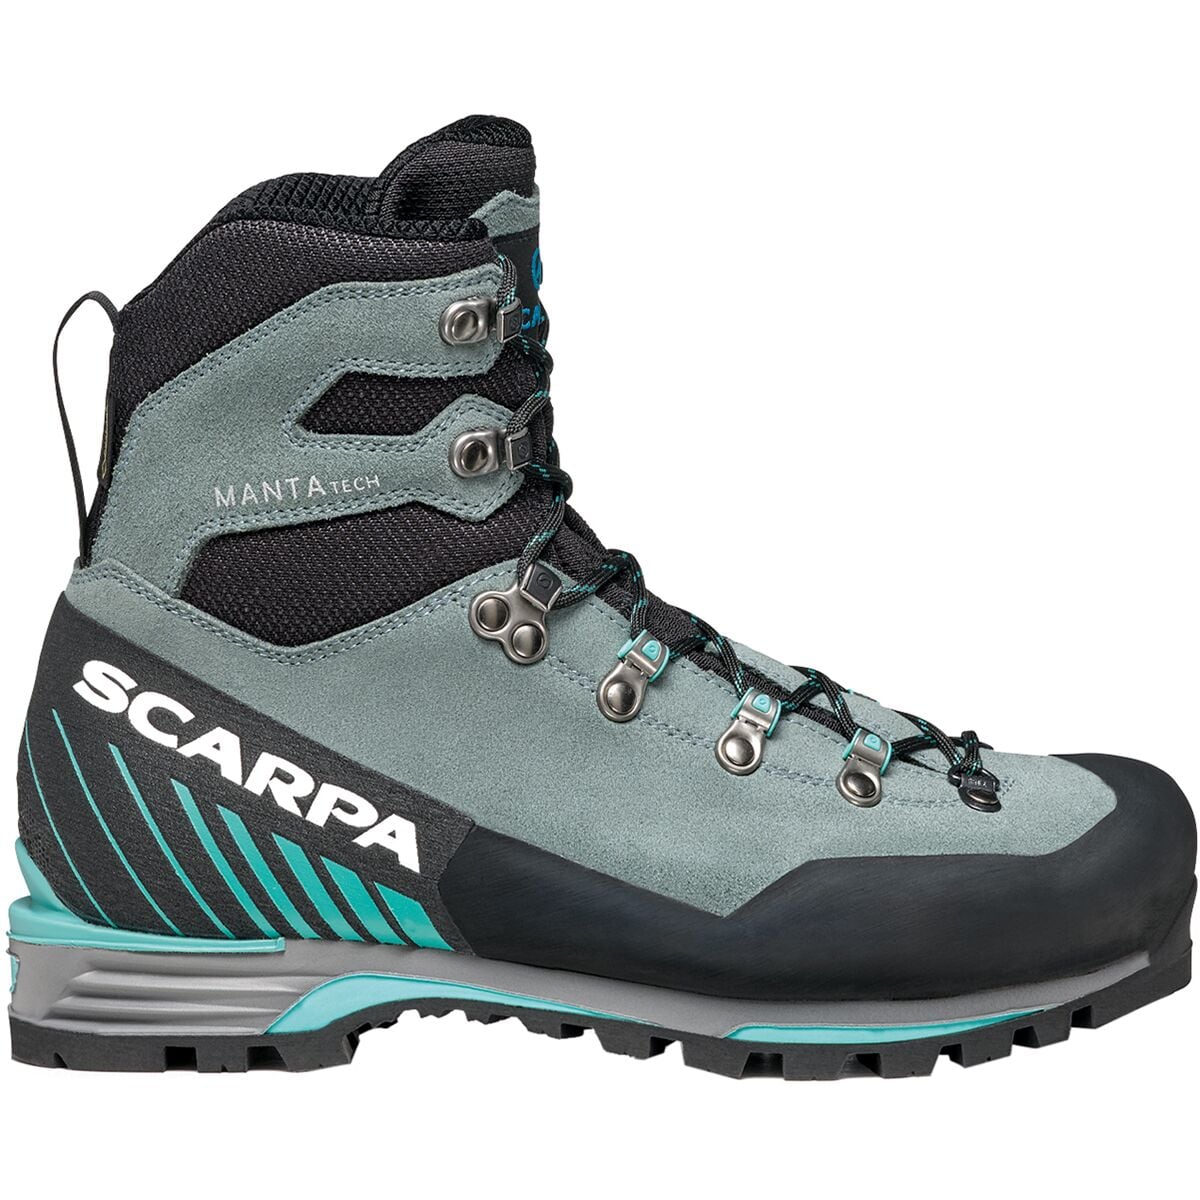 Pre-owned Scarpa Manta Tech Gtx Mountaineering Boot - Women's In Conifer/green Blue